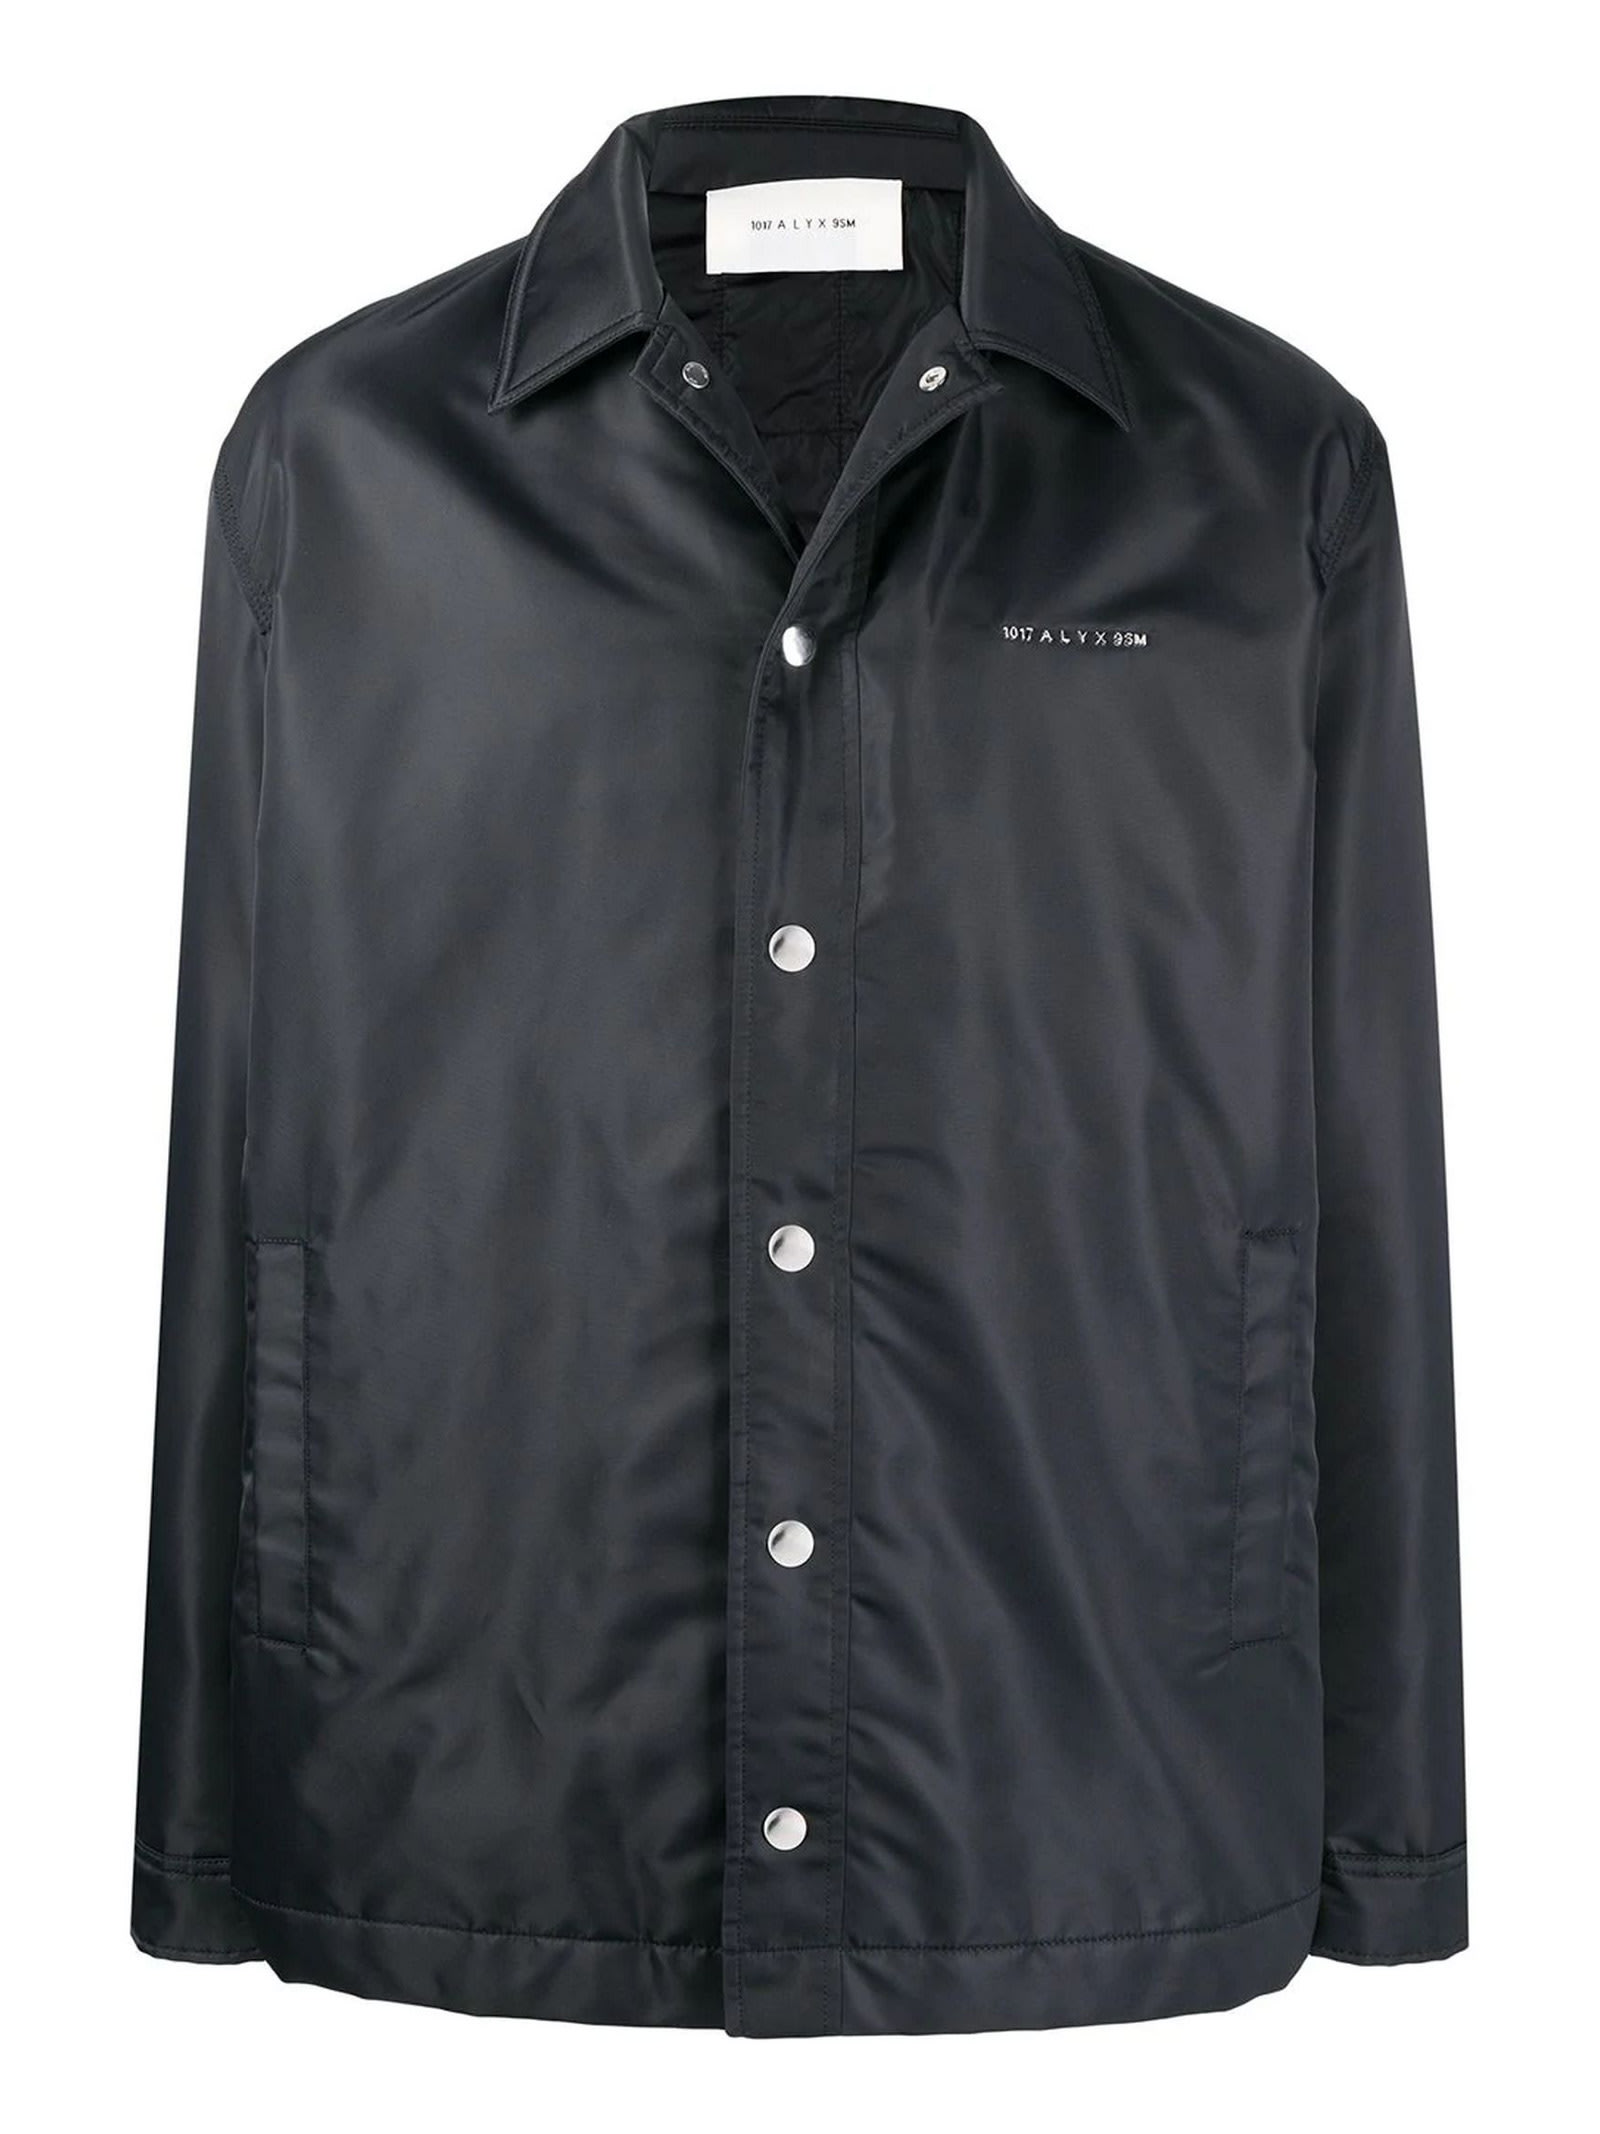 1017 ALYX 9SM Black Shirt Jacket